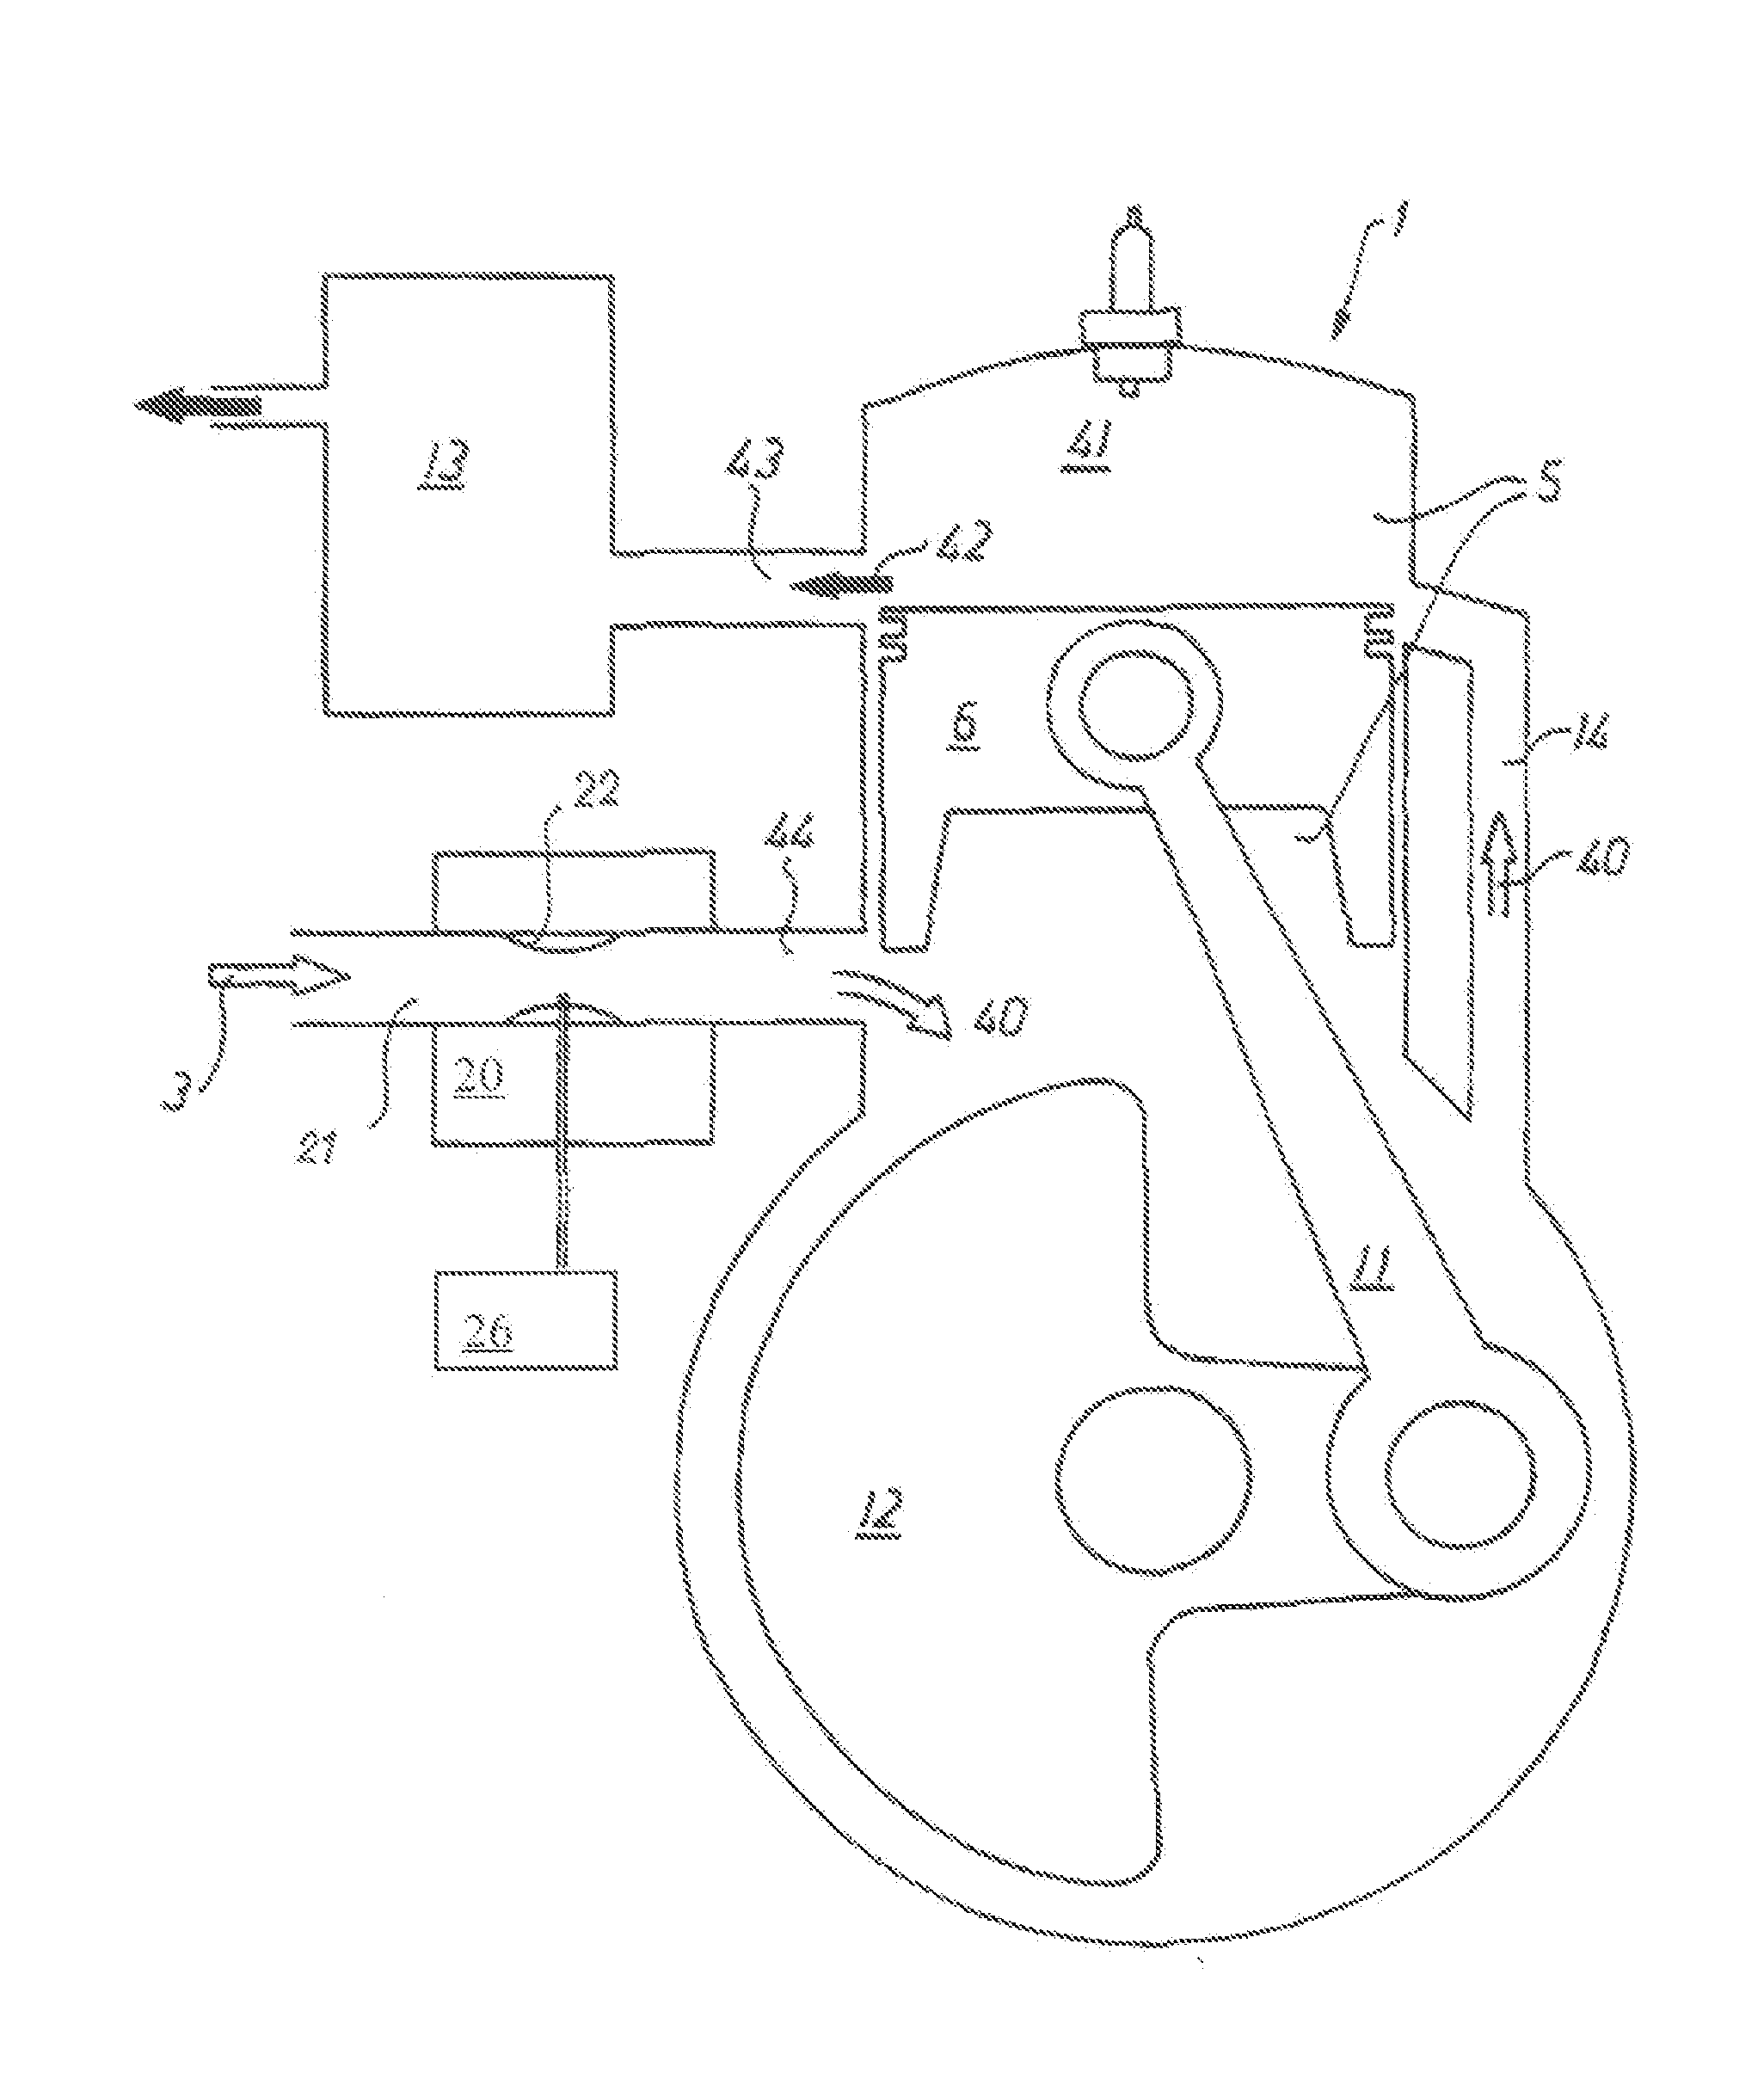 Carburetor system for a carburetor engine